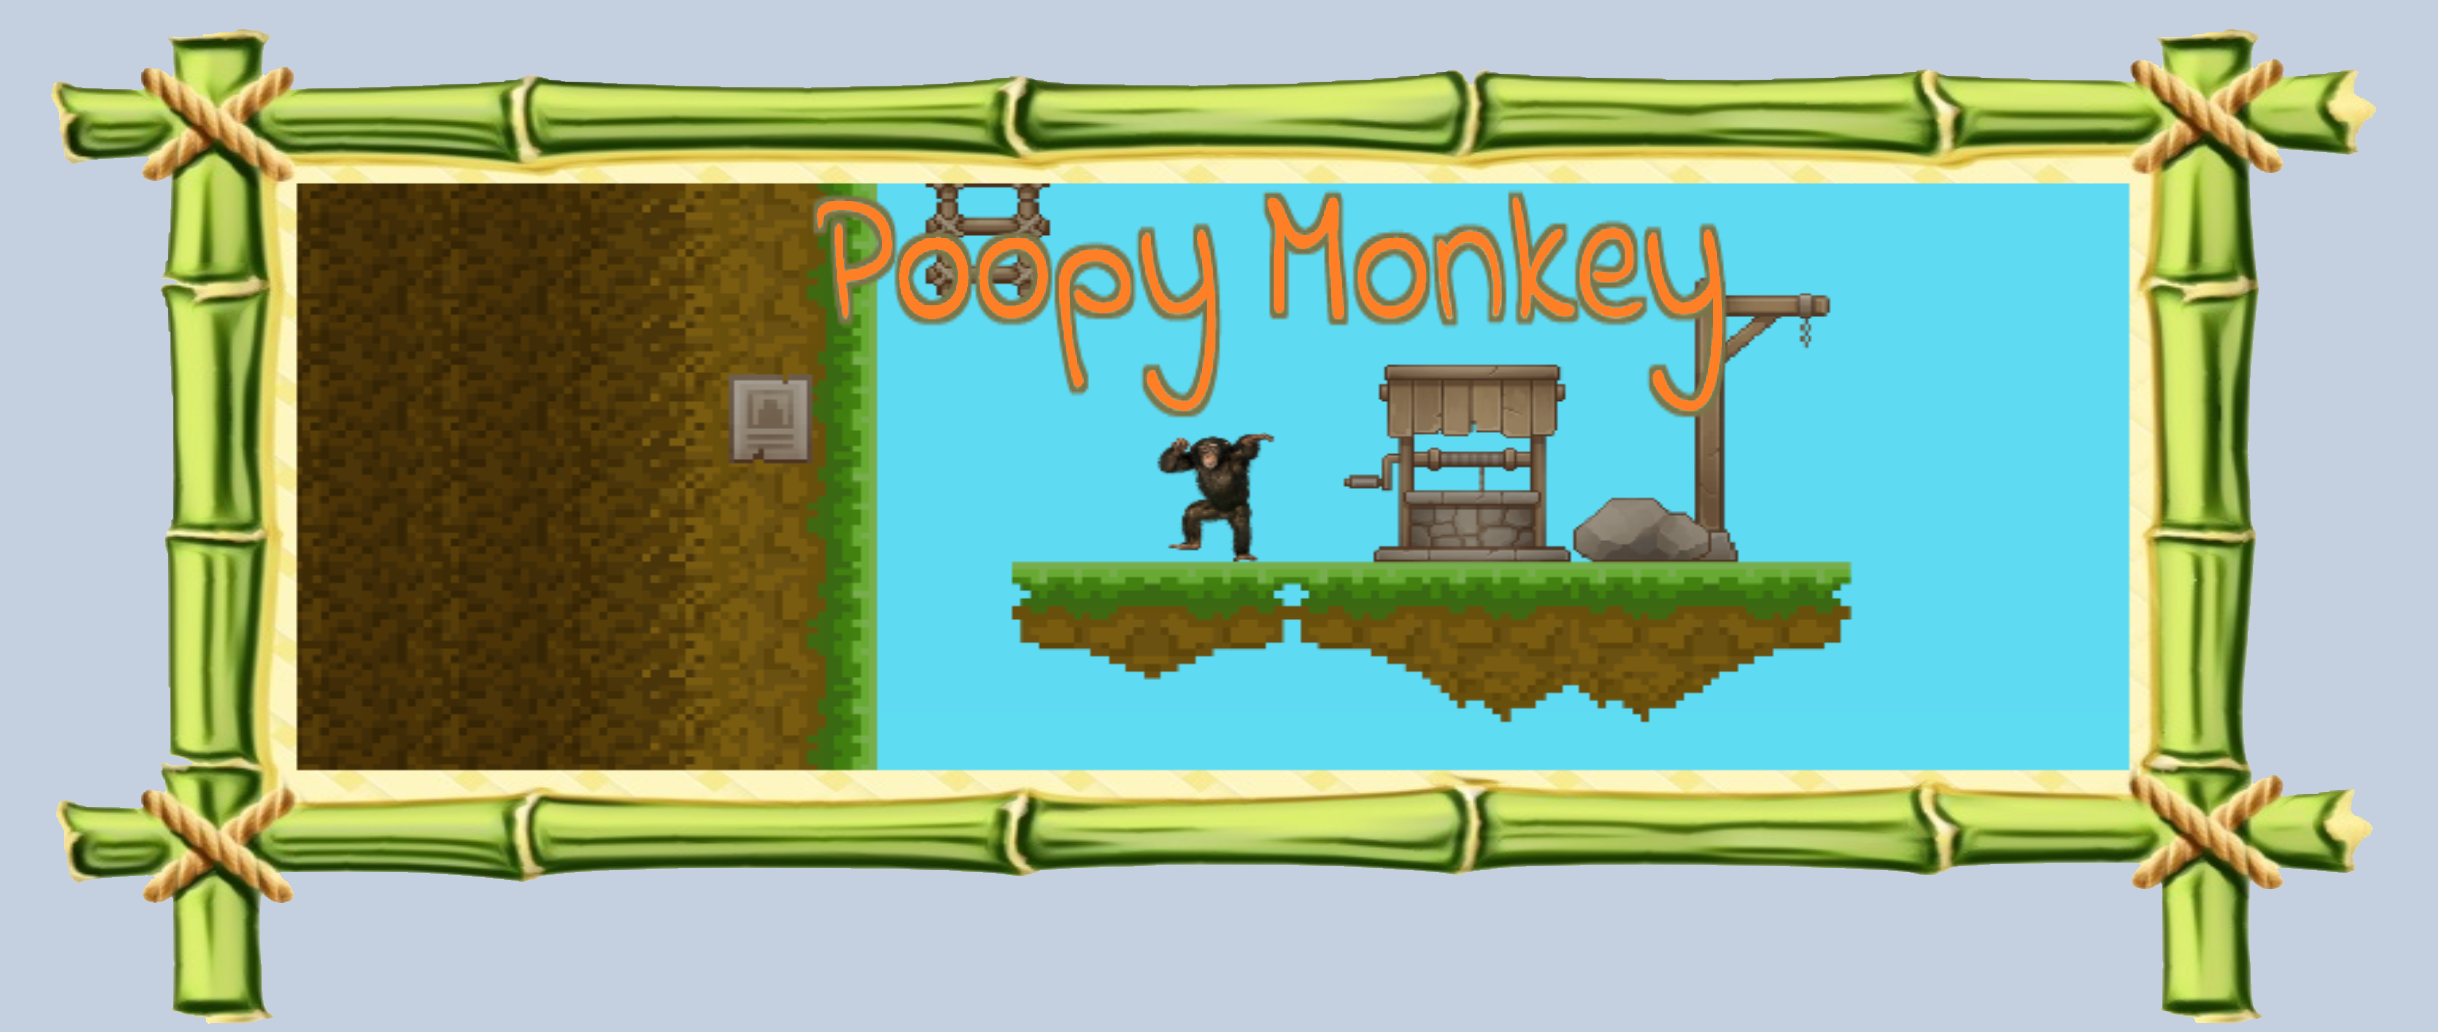 Poopy Monkey